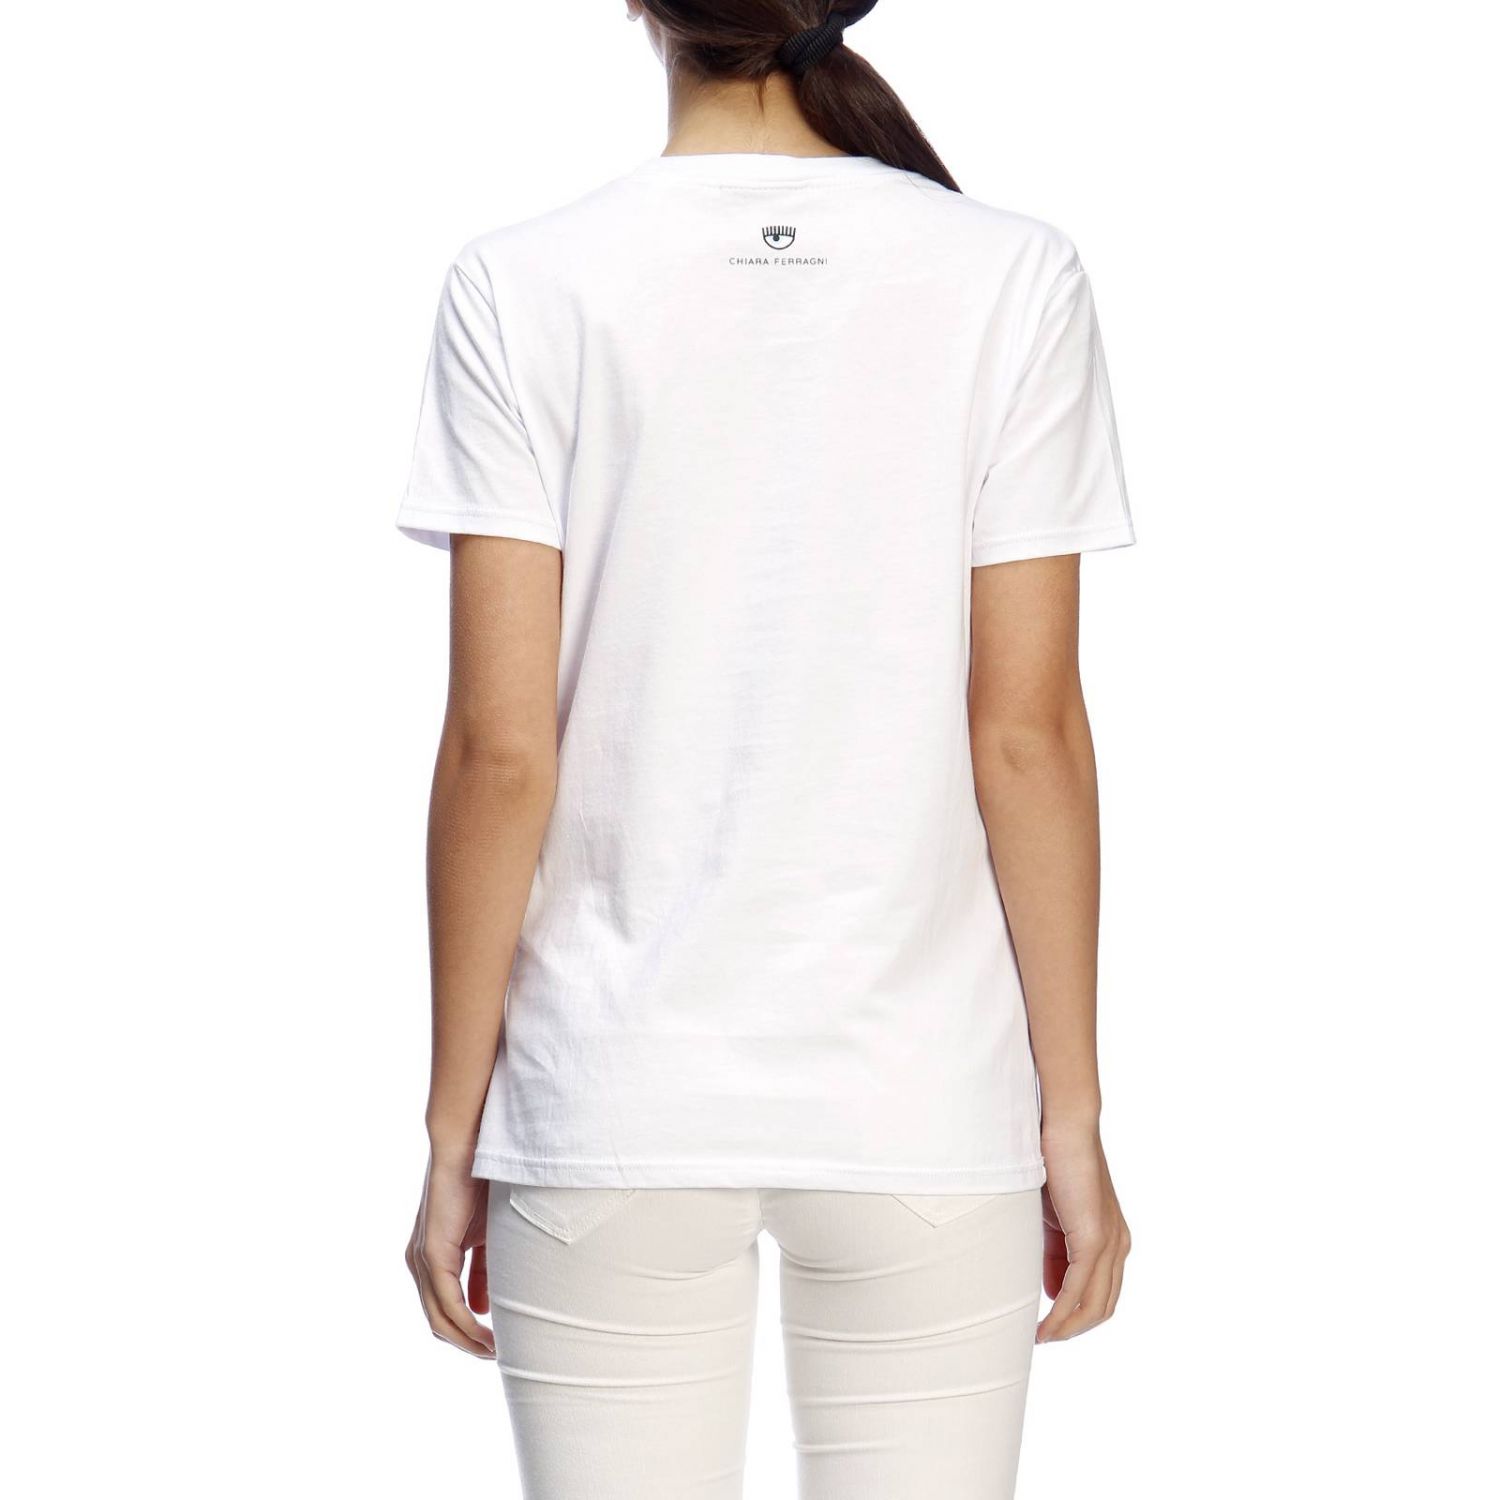 Chiara Ferragni Outlet: T-shirt women | T-Shirt Chiara Ferragni Women ...